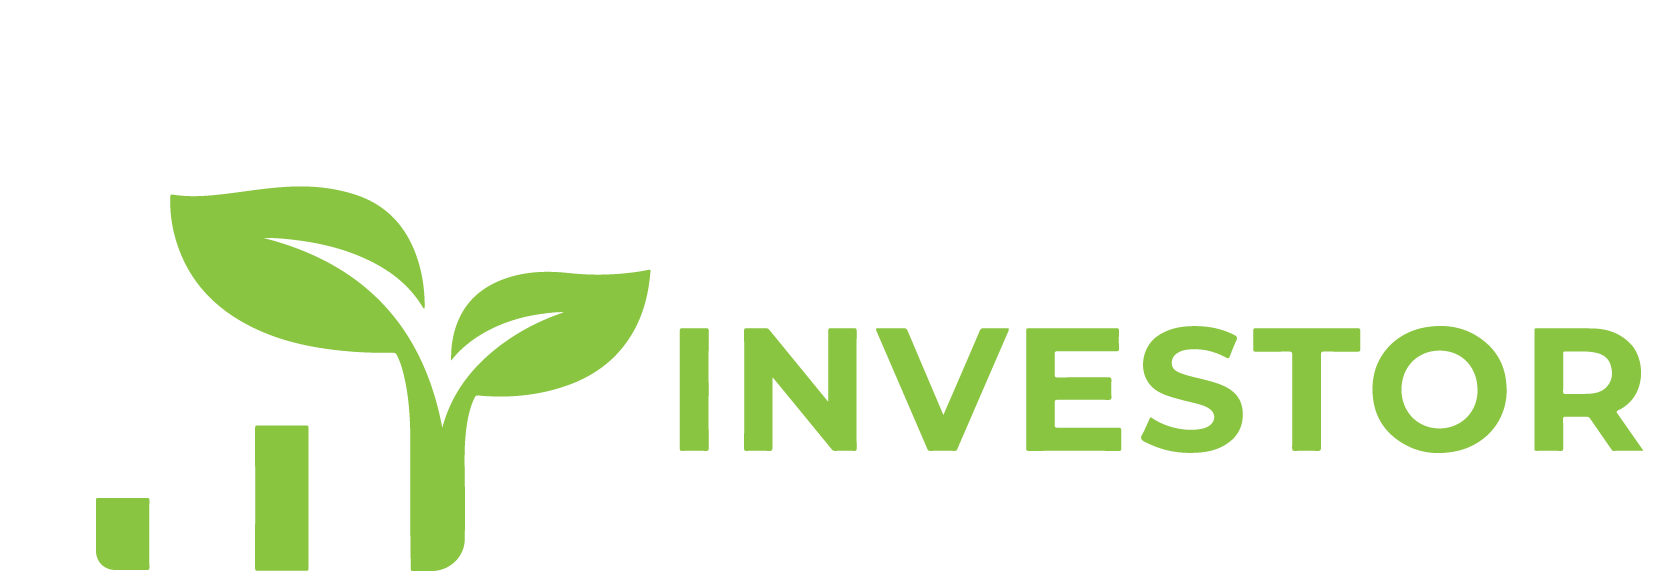 the property investor logo